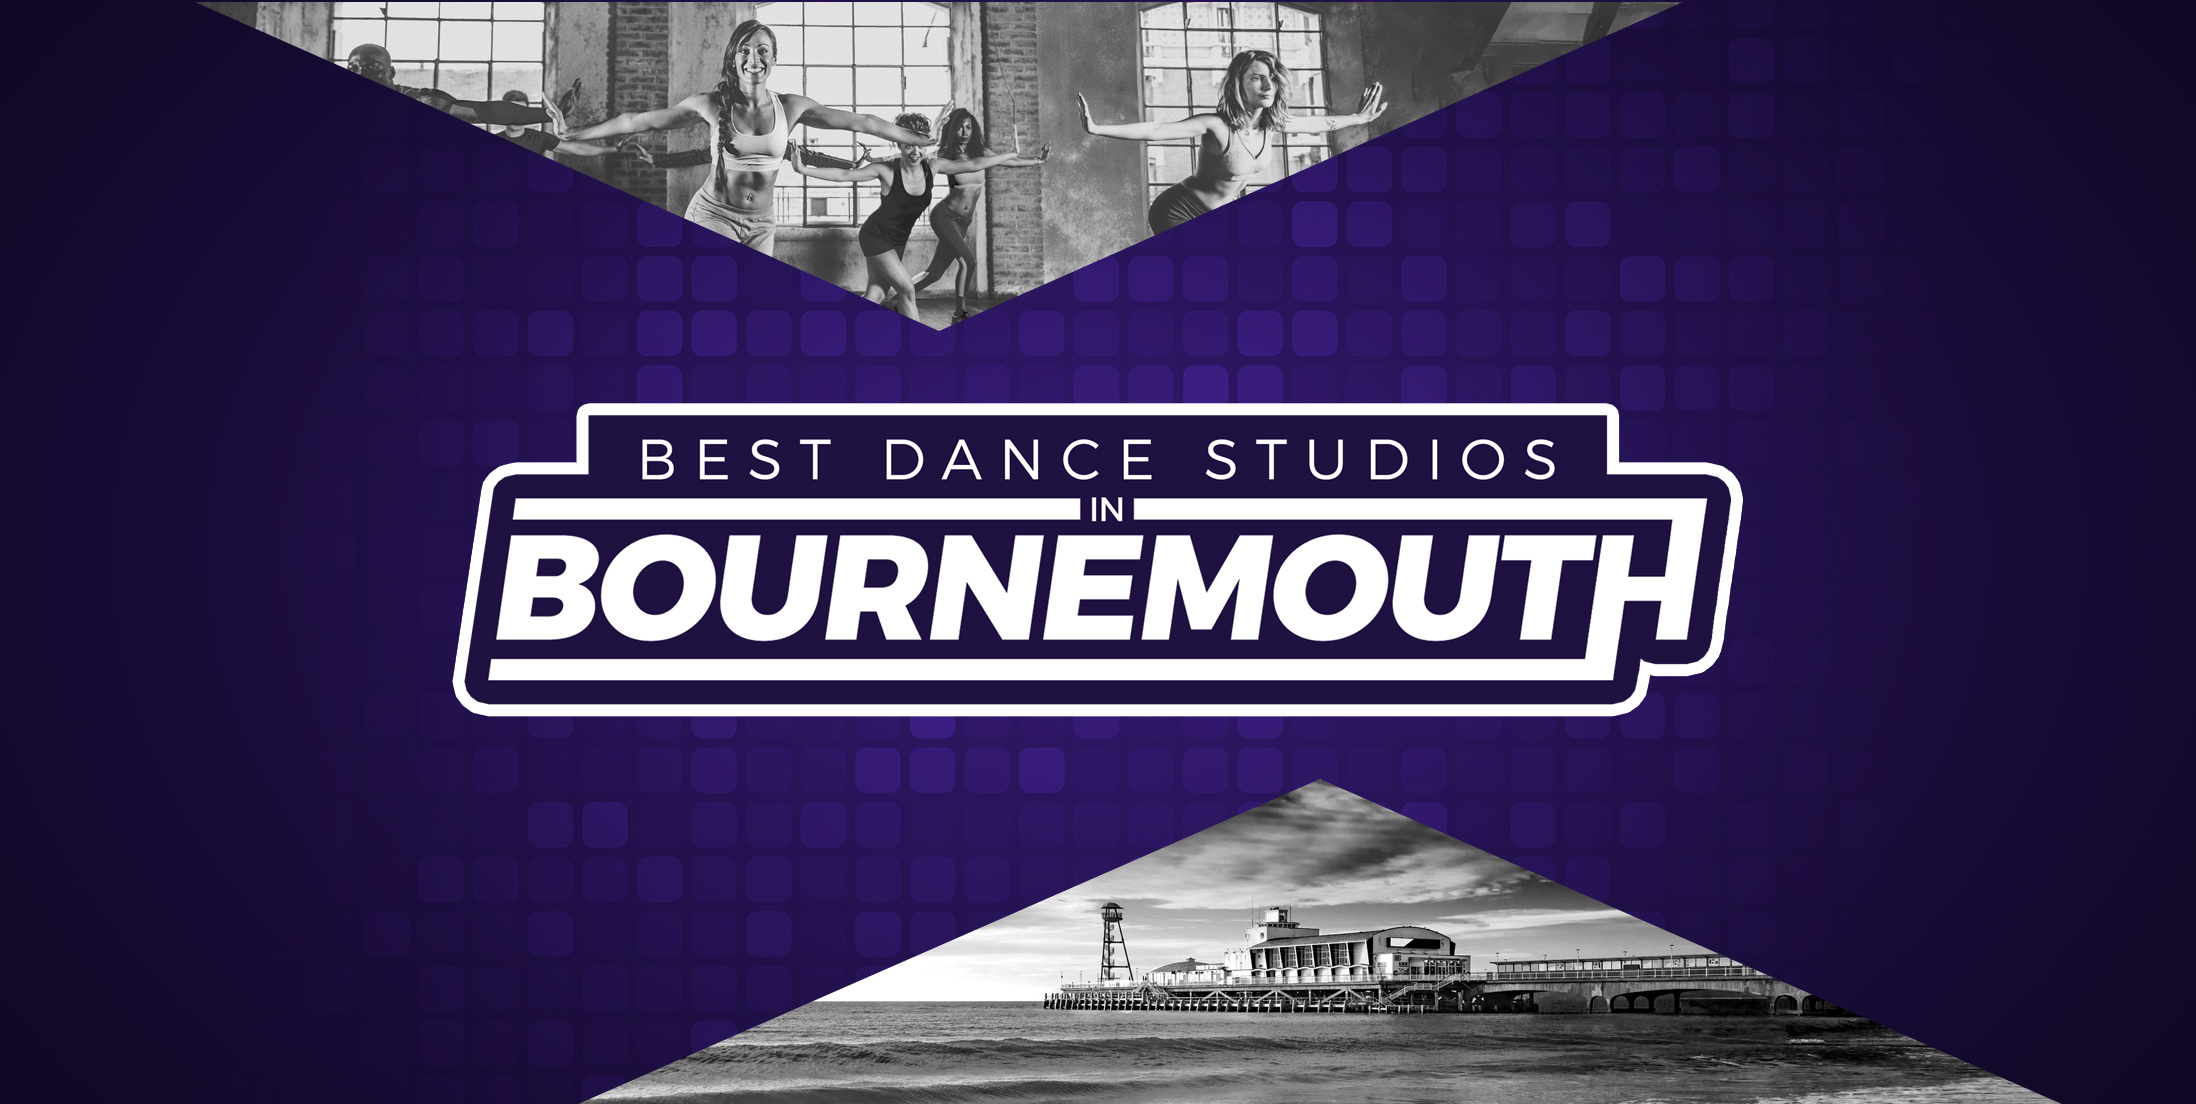 Best Dance Studios in Bournemouth